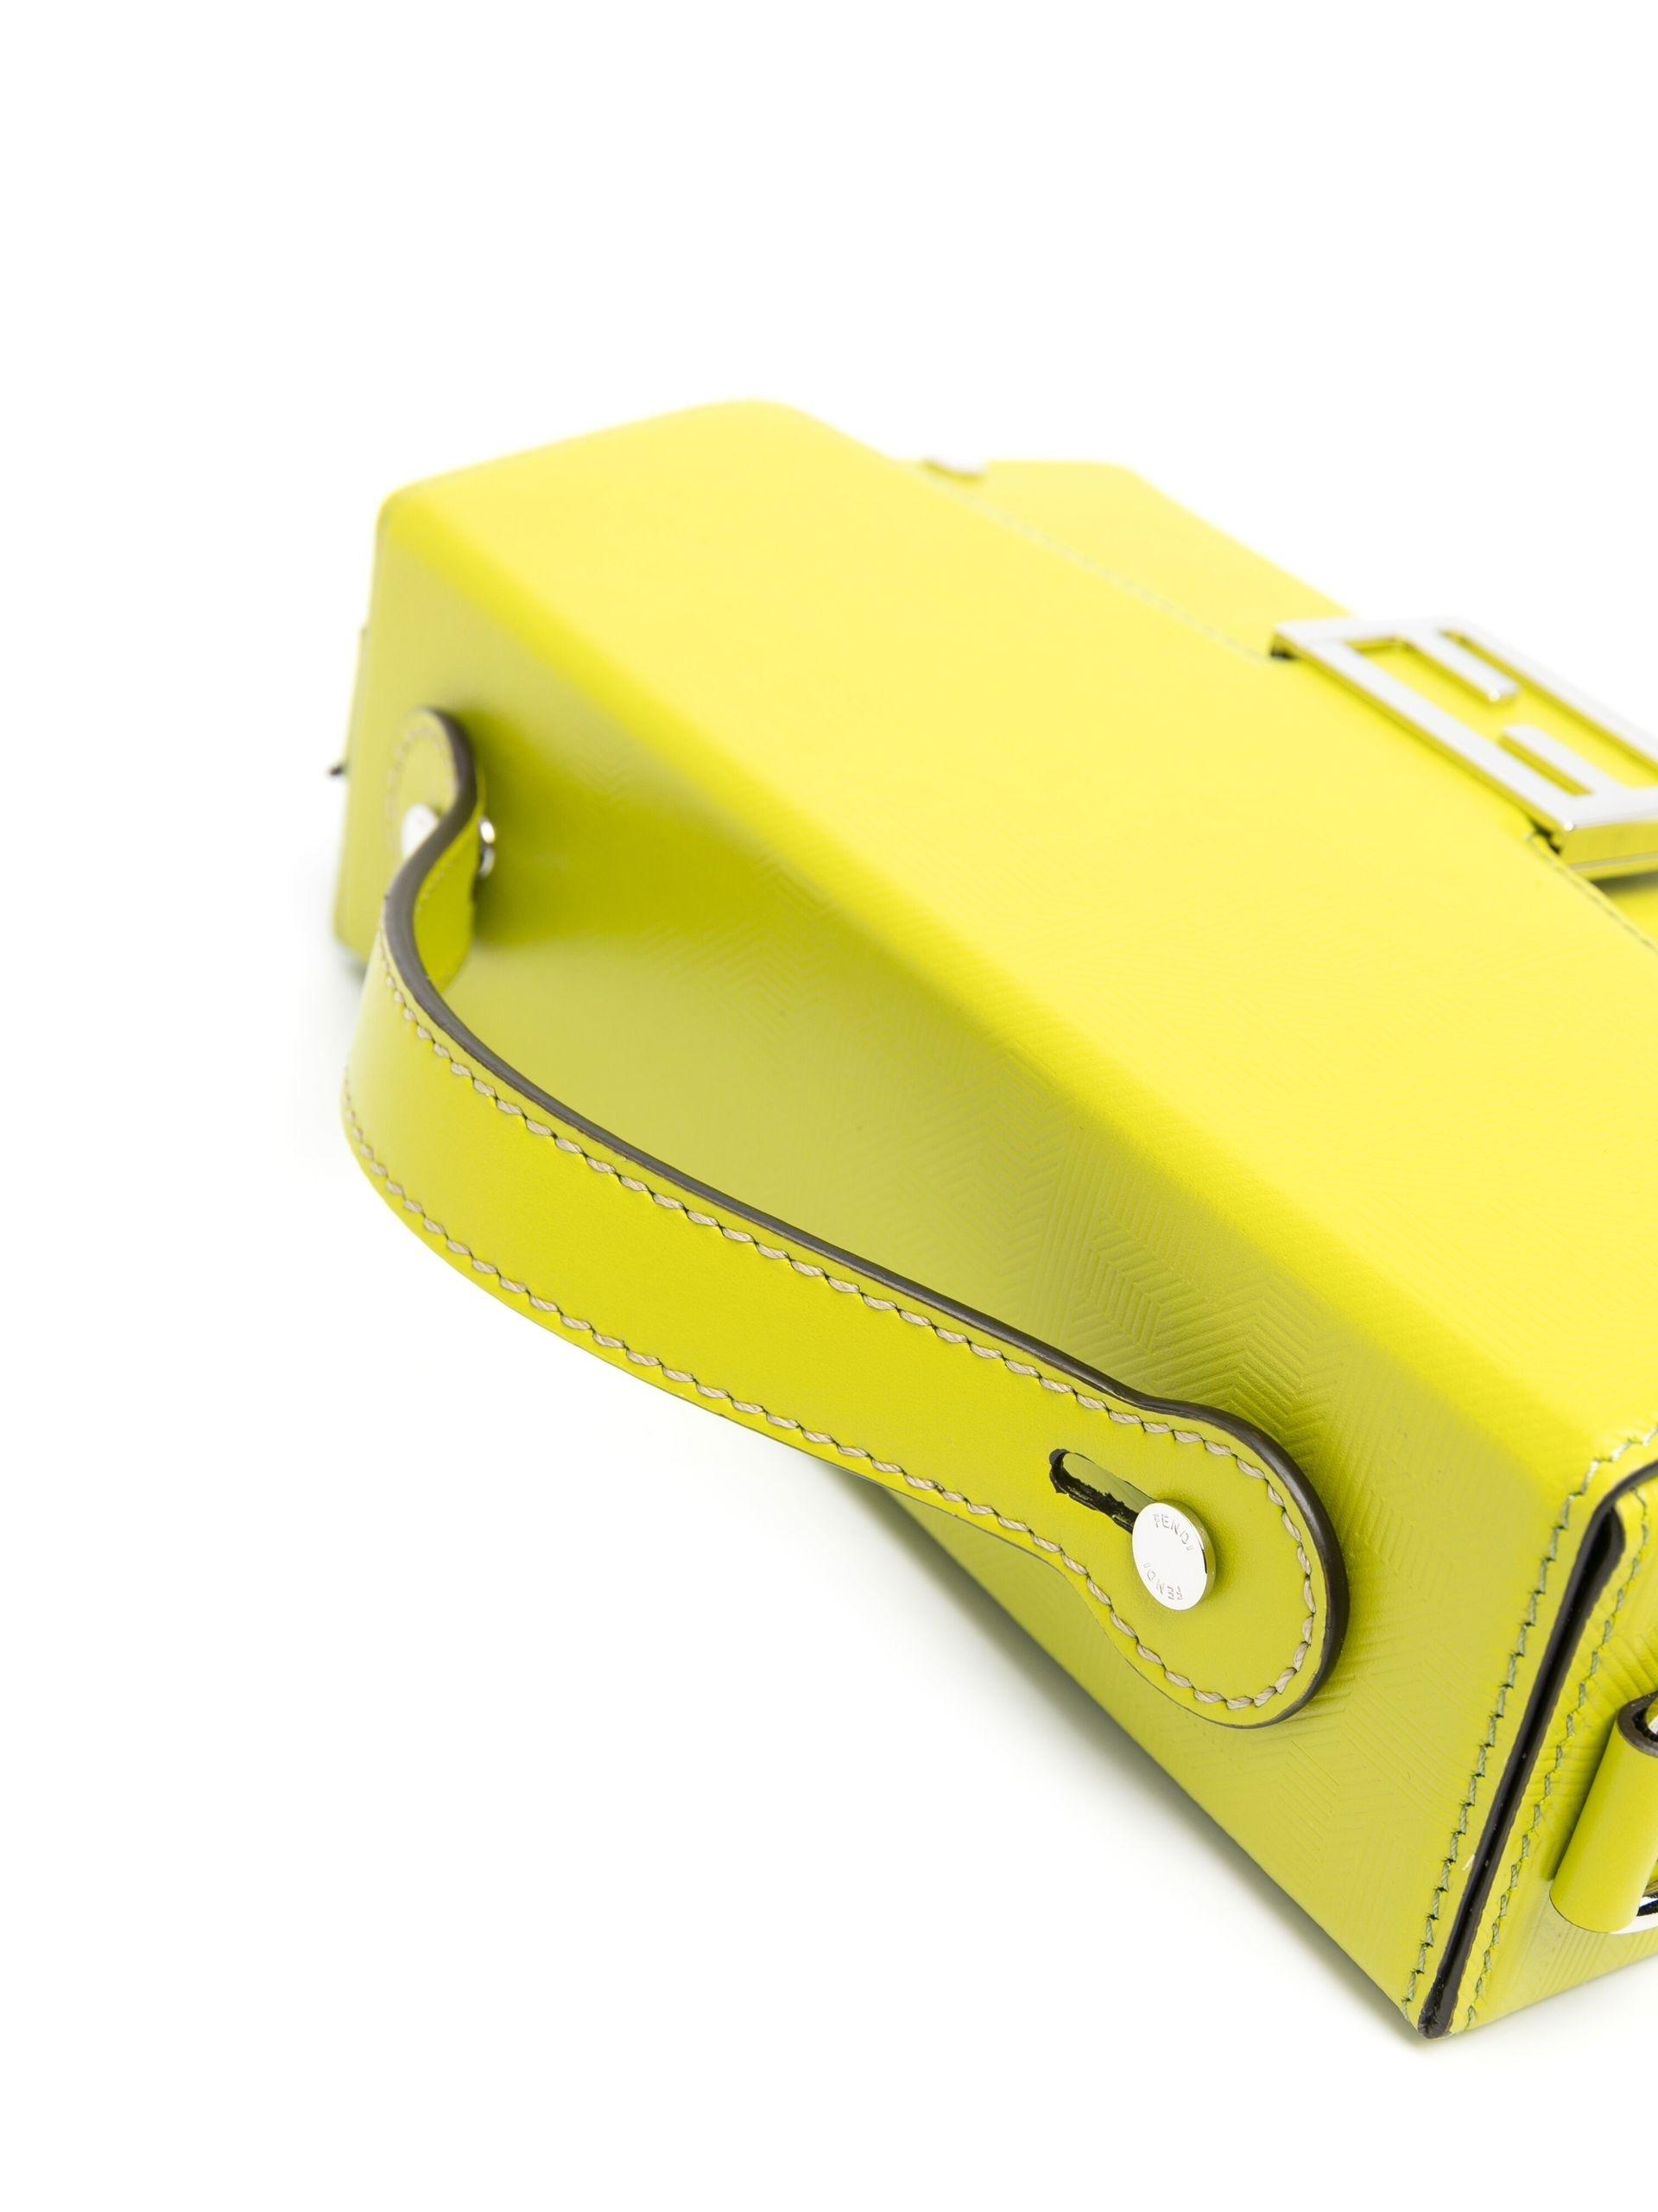 Fendi by Marc Jacobs Baguette Mini Neon Yellow Nappa Leather Bag